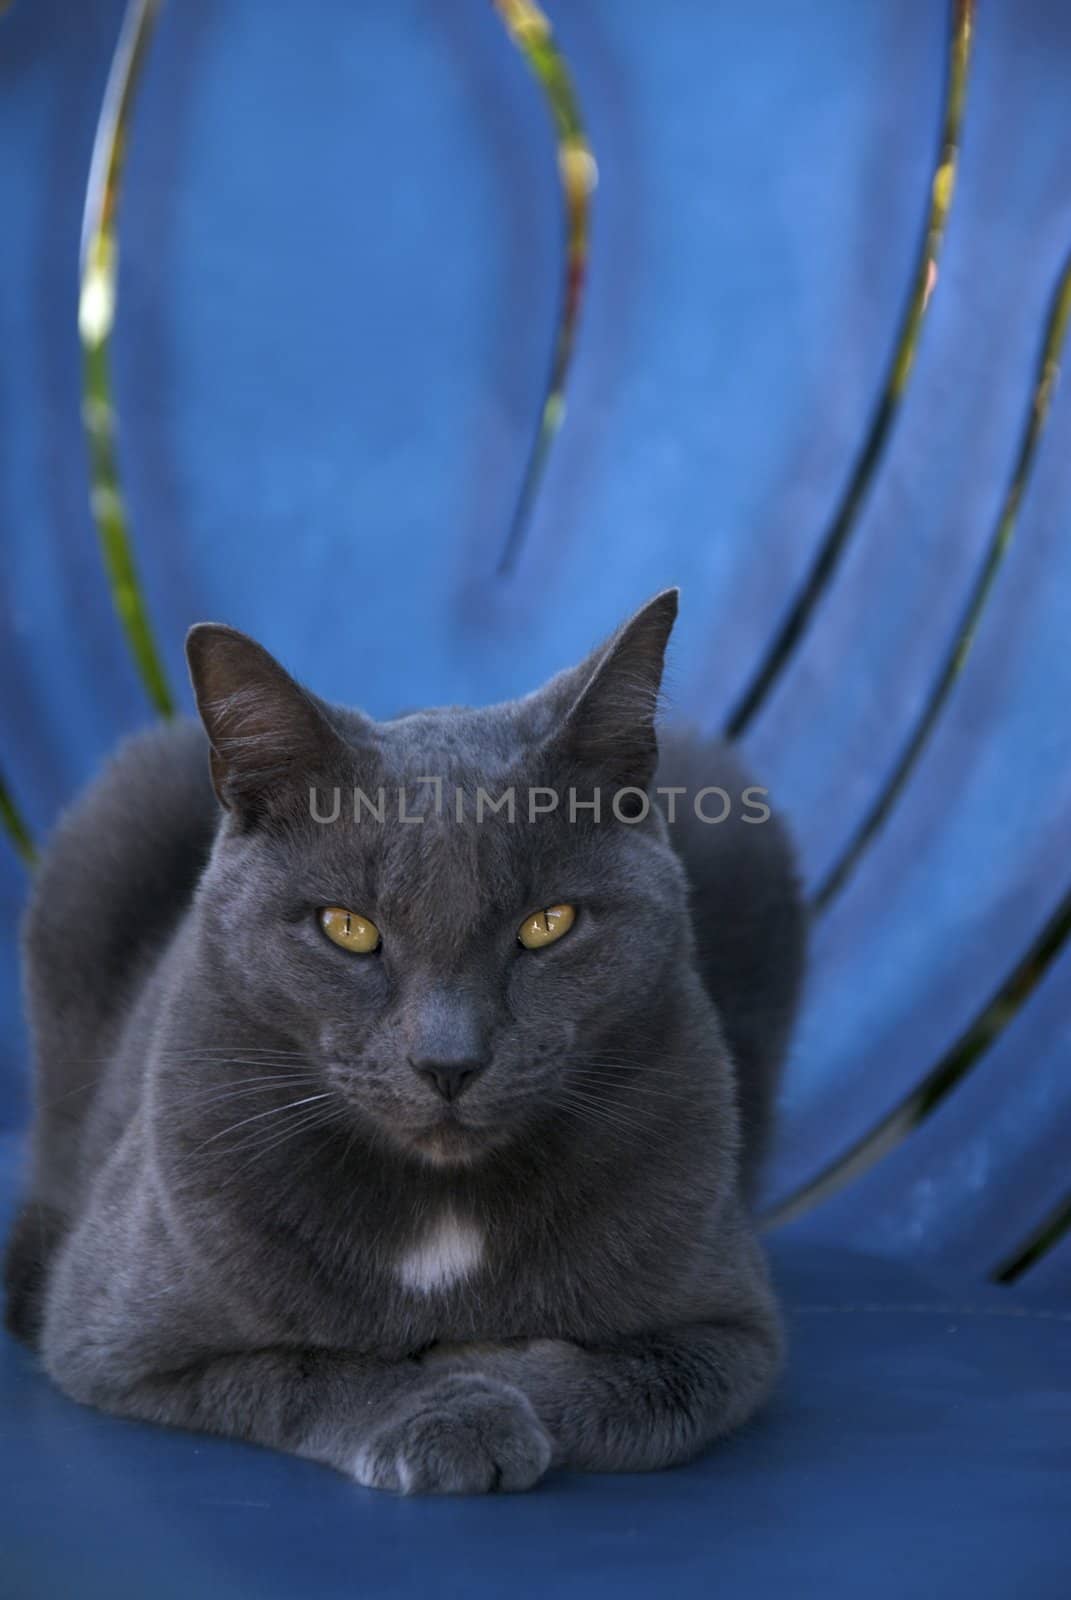 A stray cat sits regally on an aqua blue chair